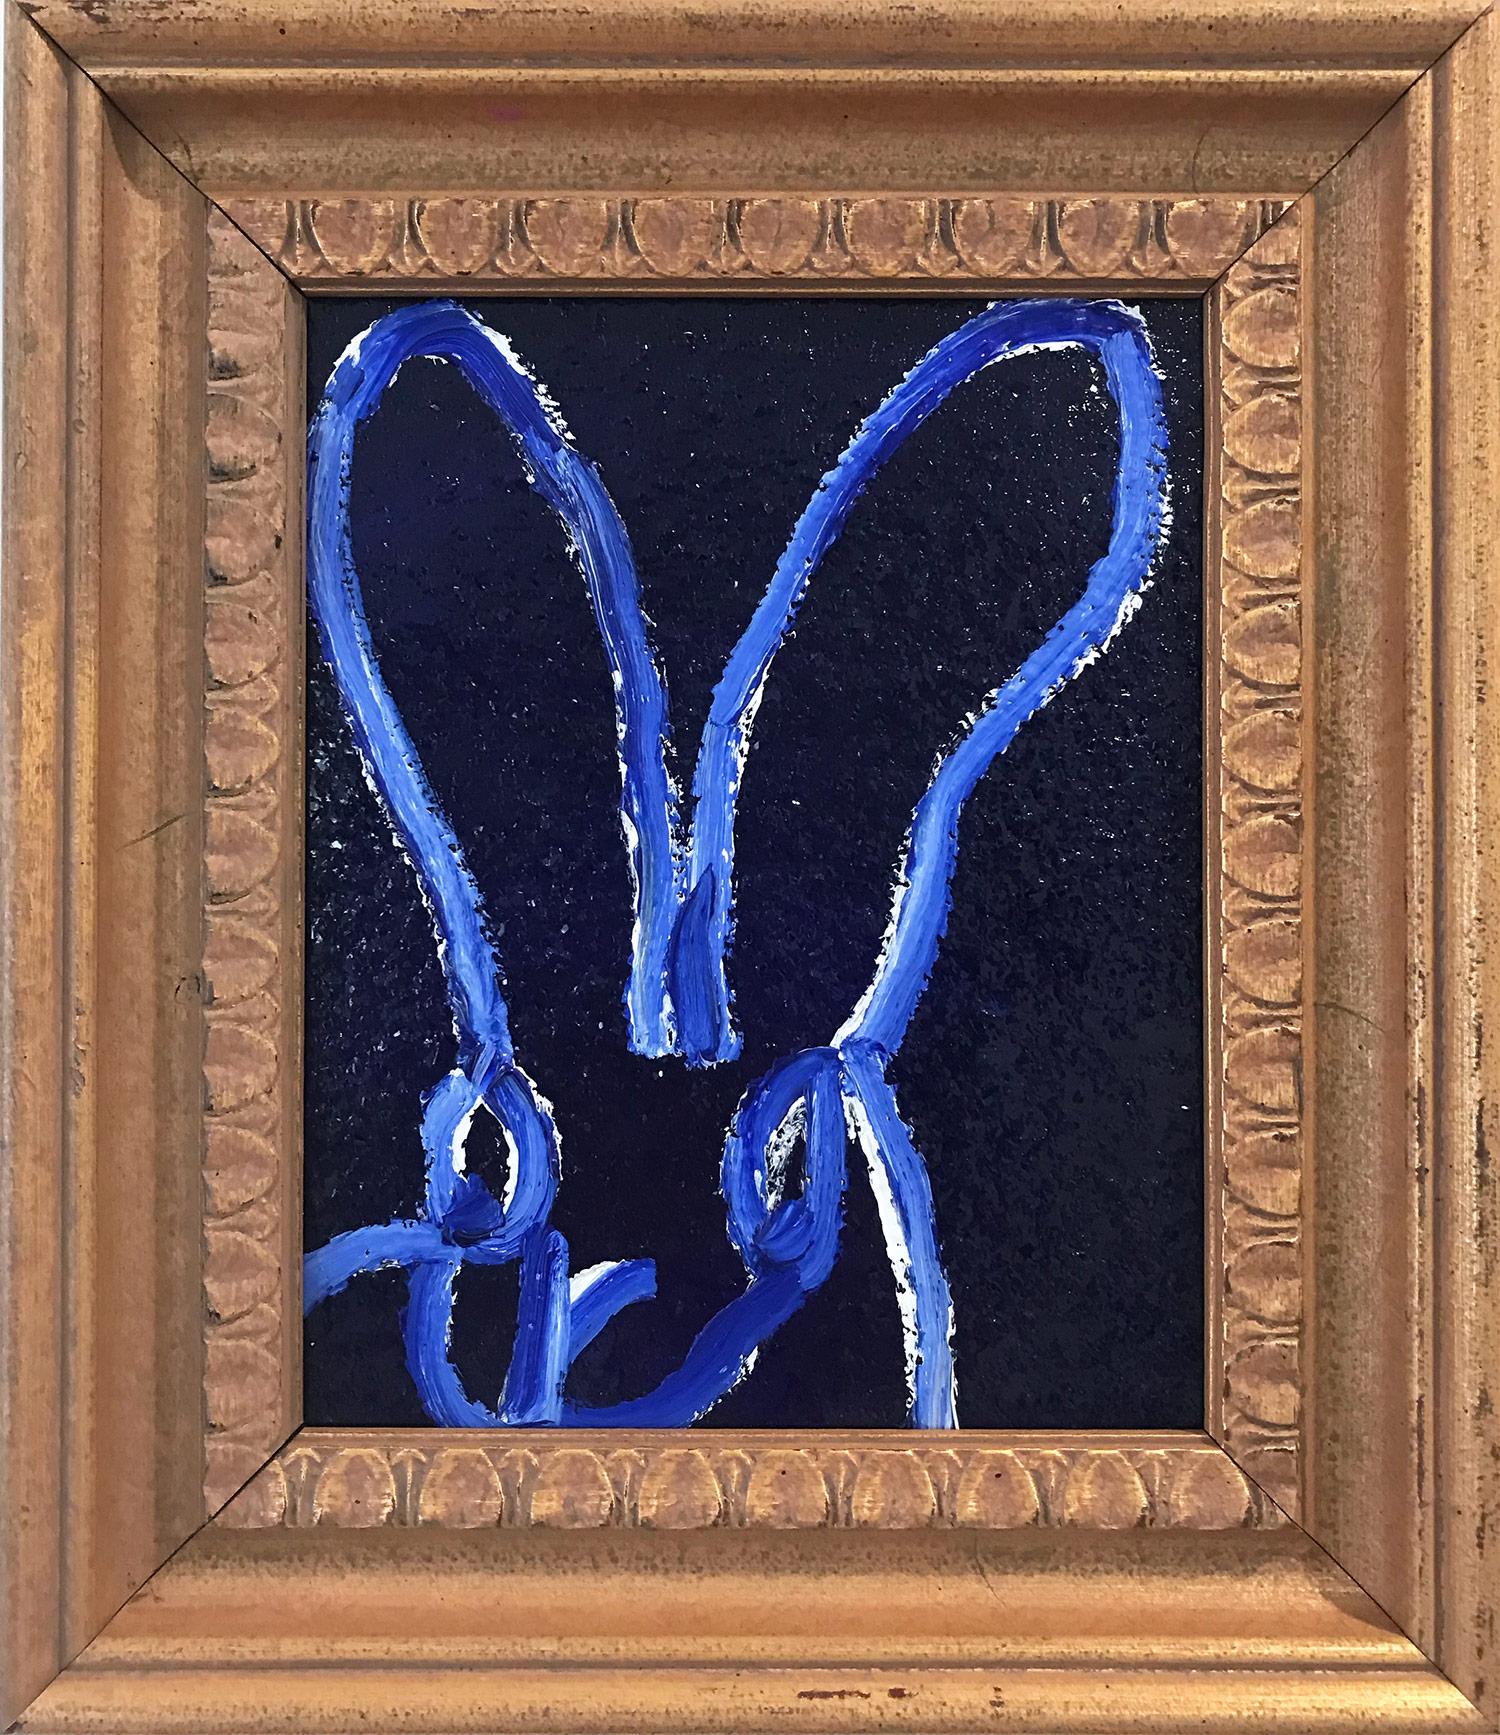 Hunt Slonem Abstract Painting - "Ultramarine Blues" (Diamond Dust Bunny on Ultramarine Blue)